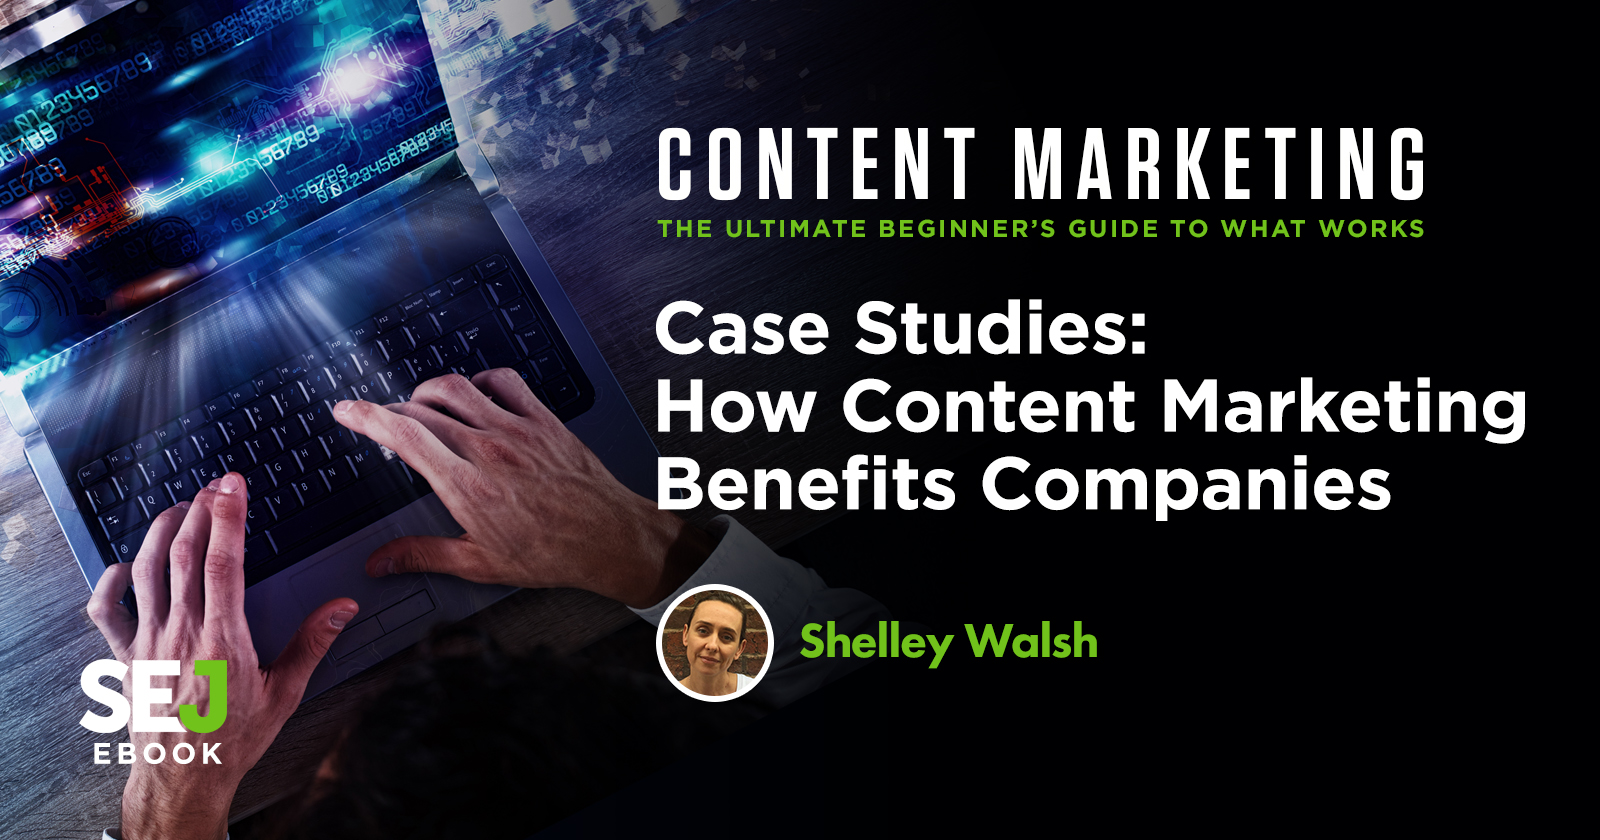 Case Studies - How Content Marketing Benefits Companies